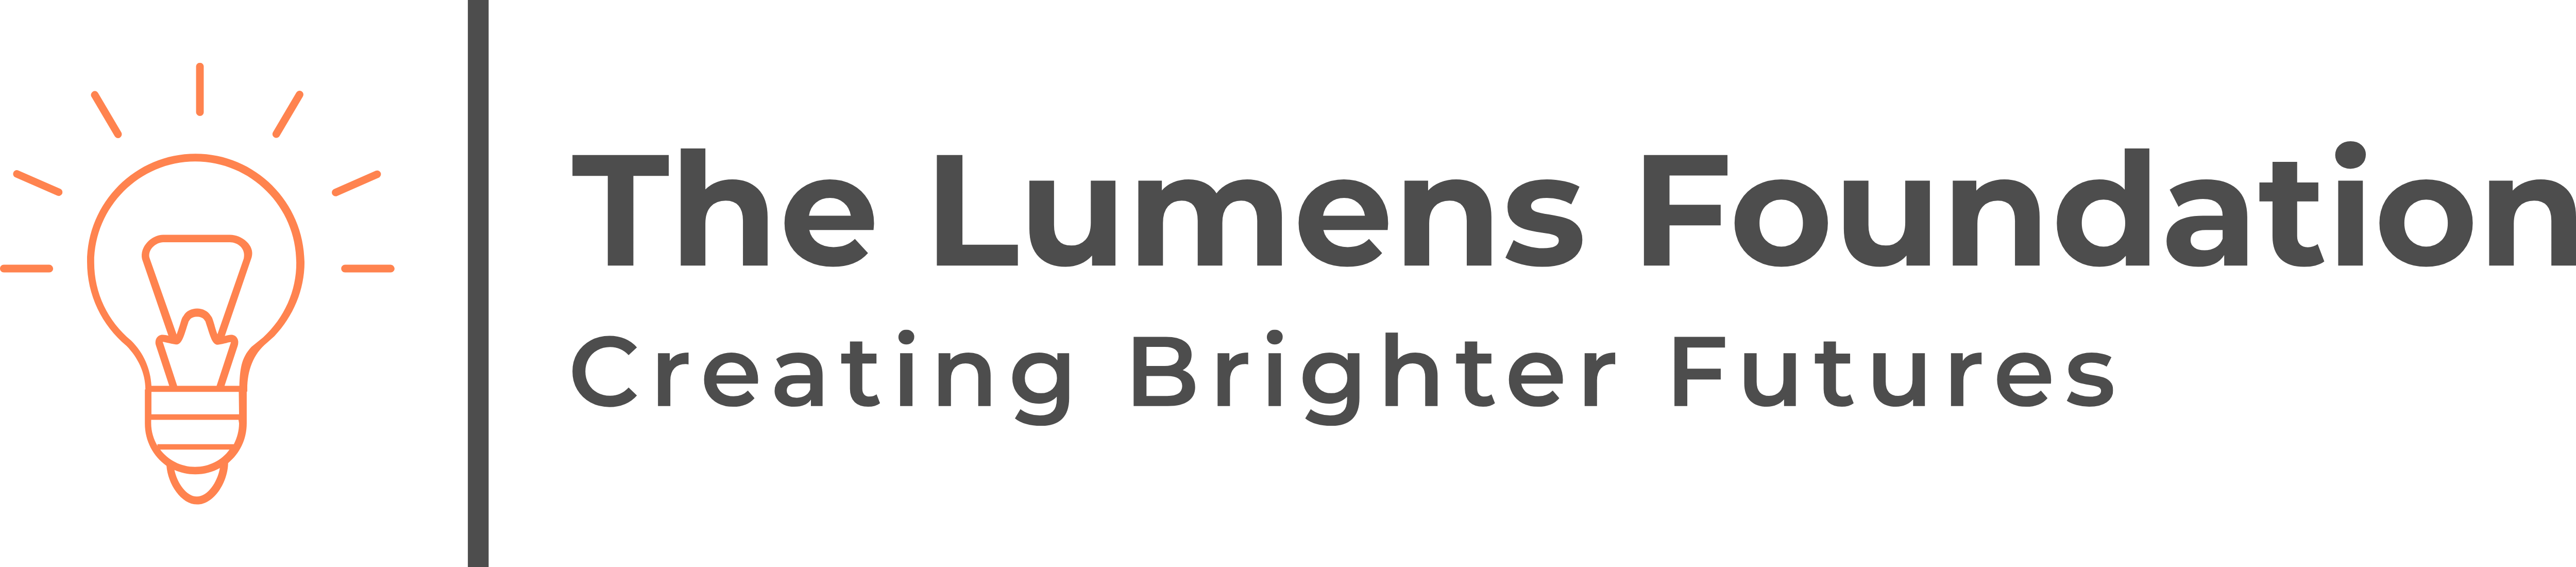 The Lumens Foundation logo